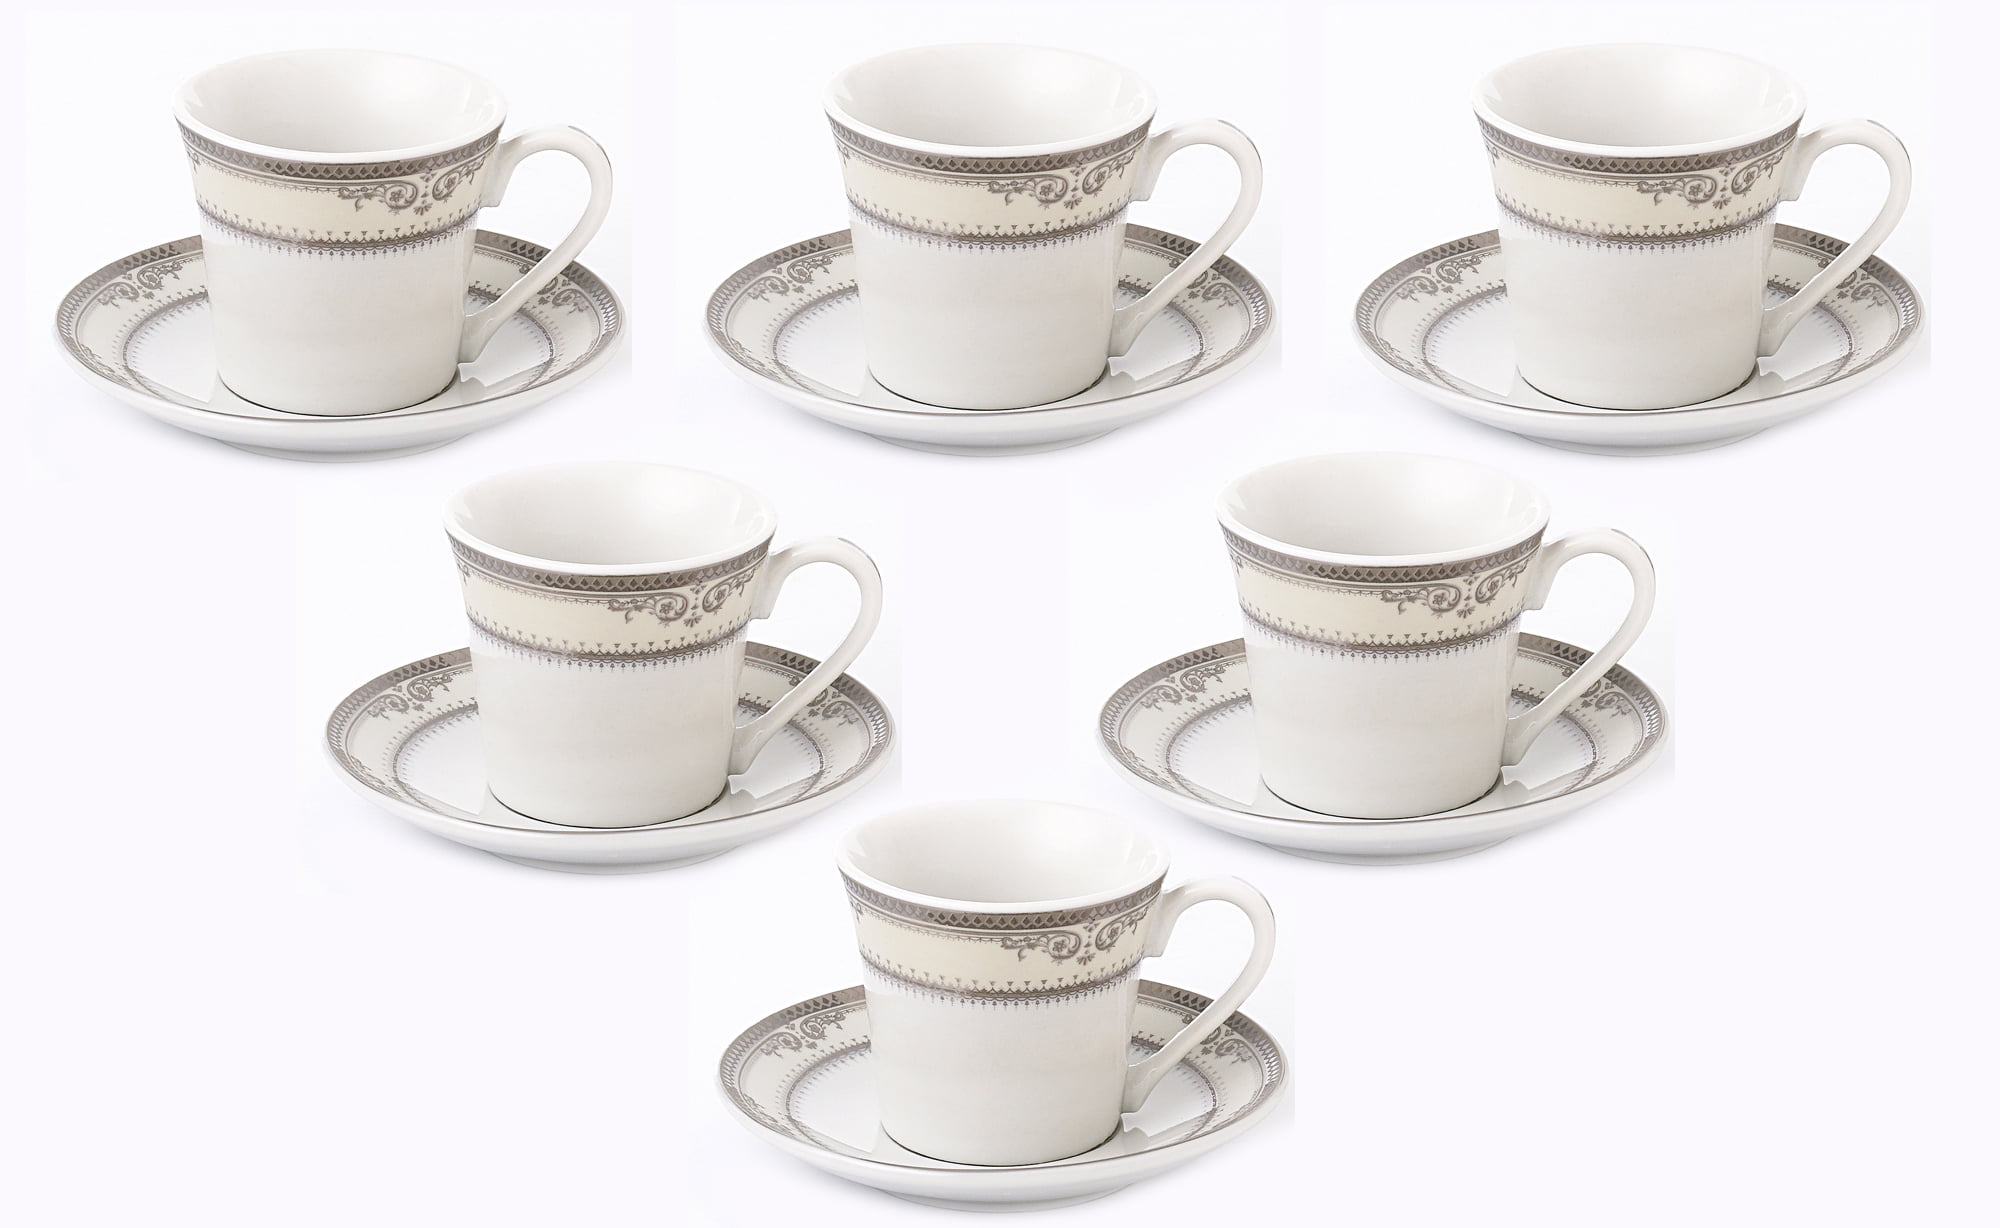 SooMILE 7oz Espresso Cups and Saucers Set Porcelain